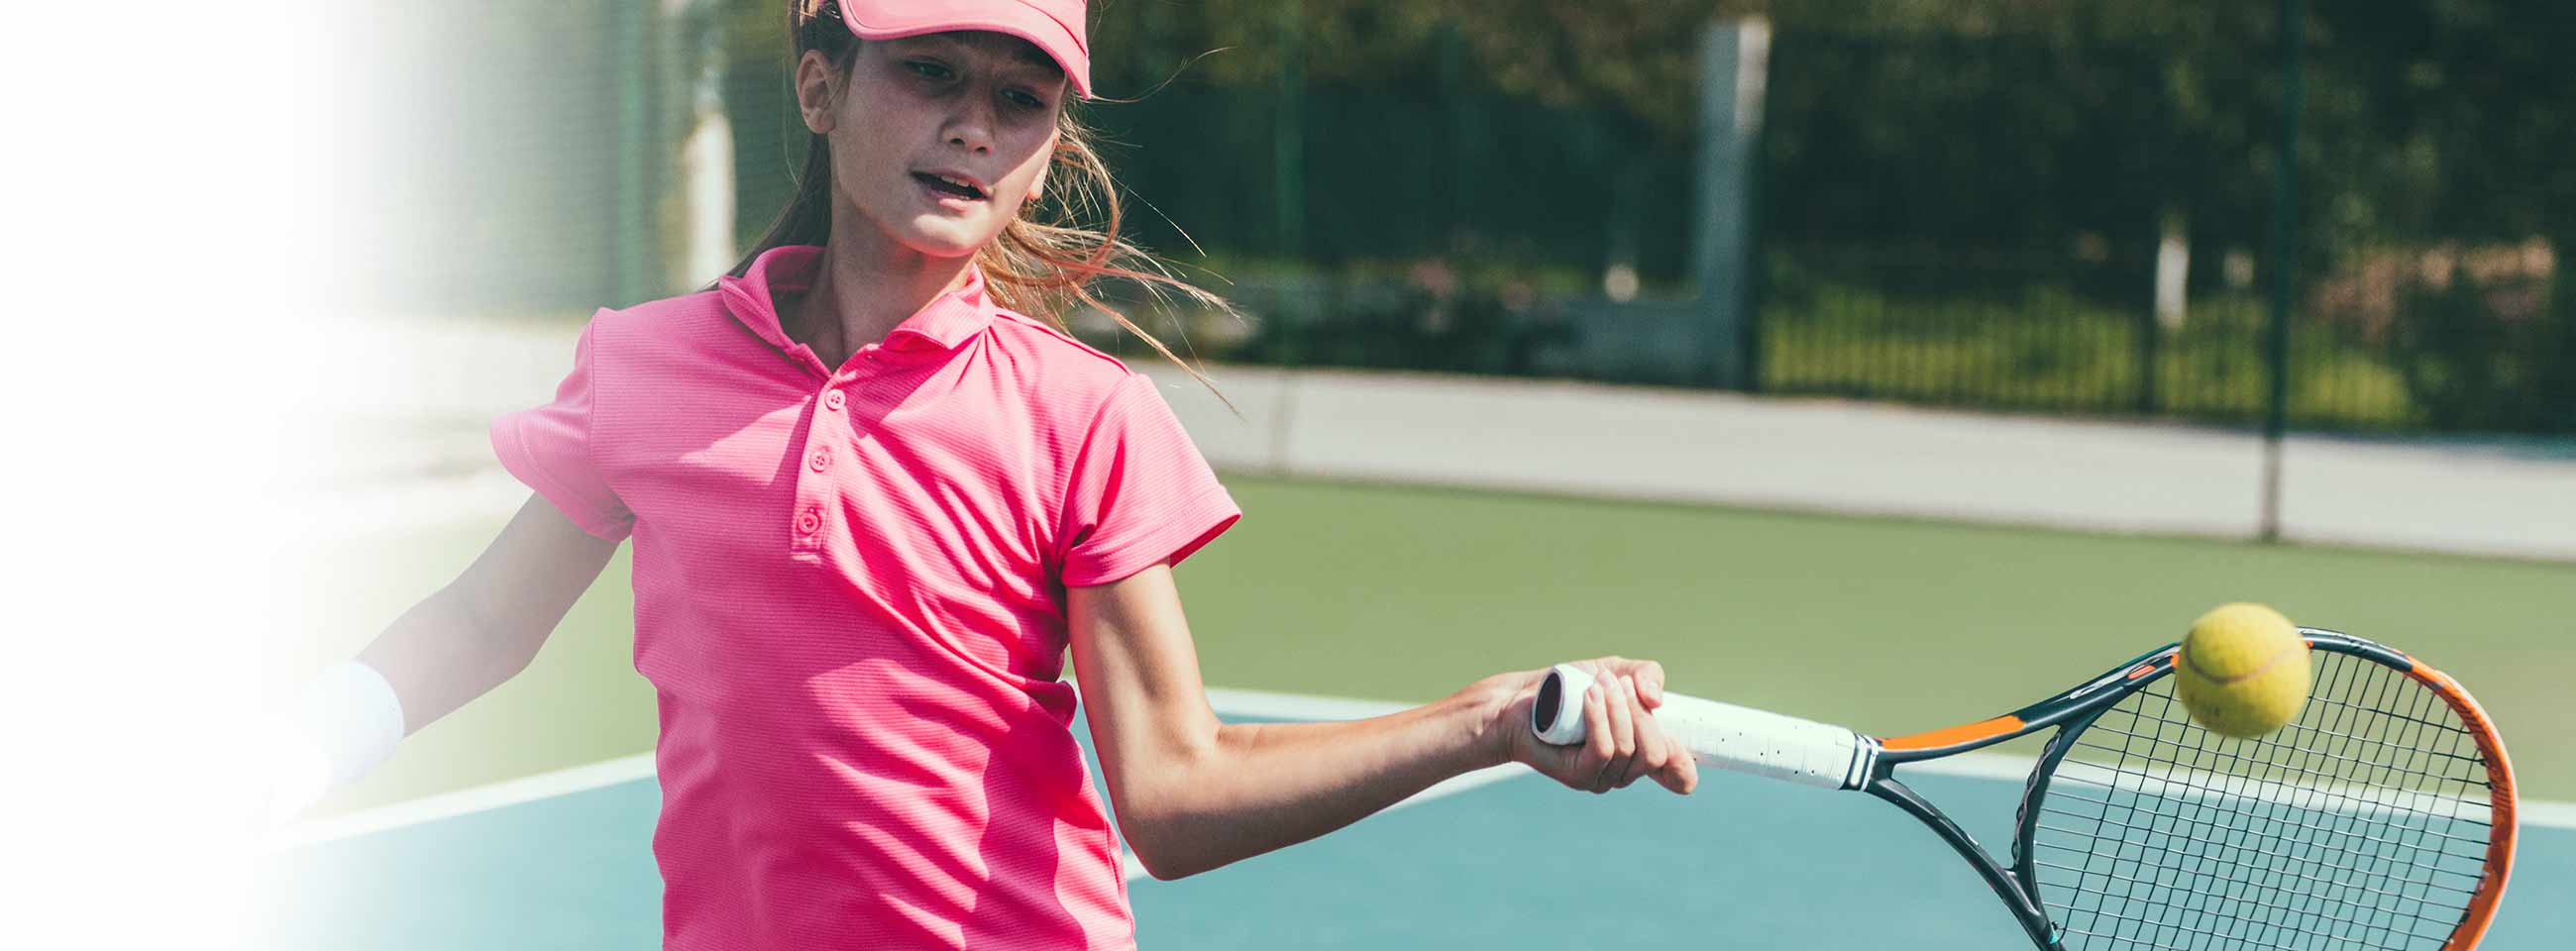 Sydney Girl Playing Tennis